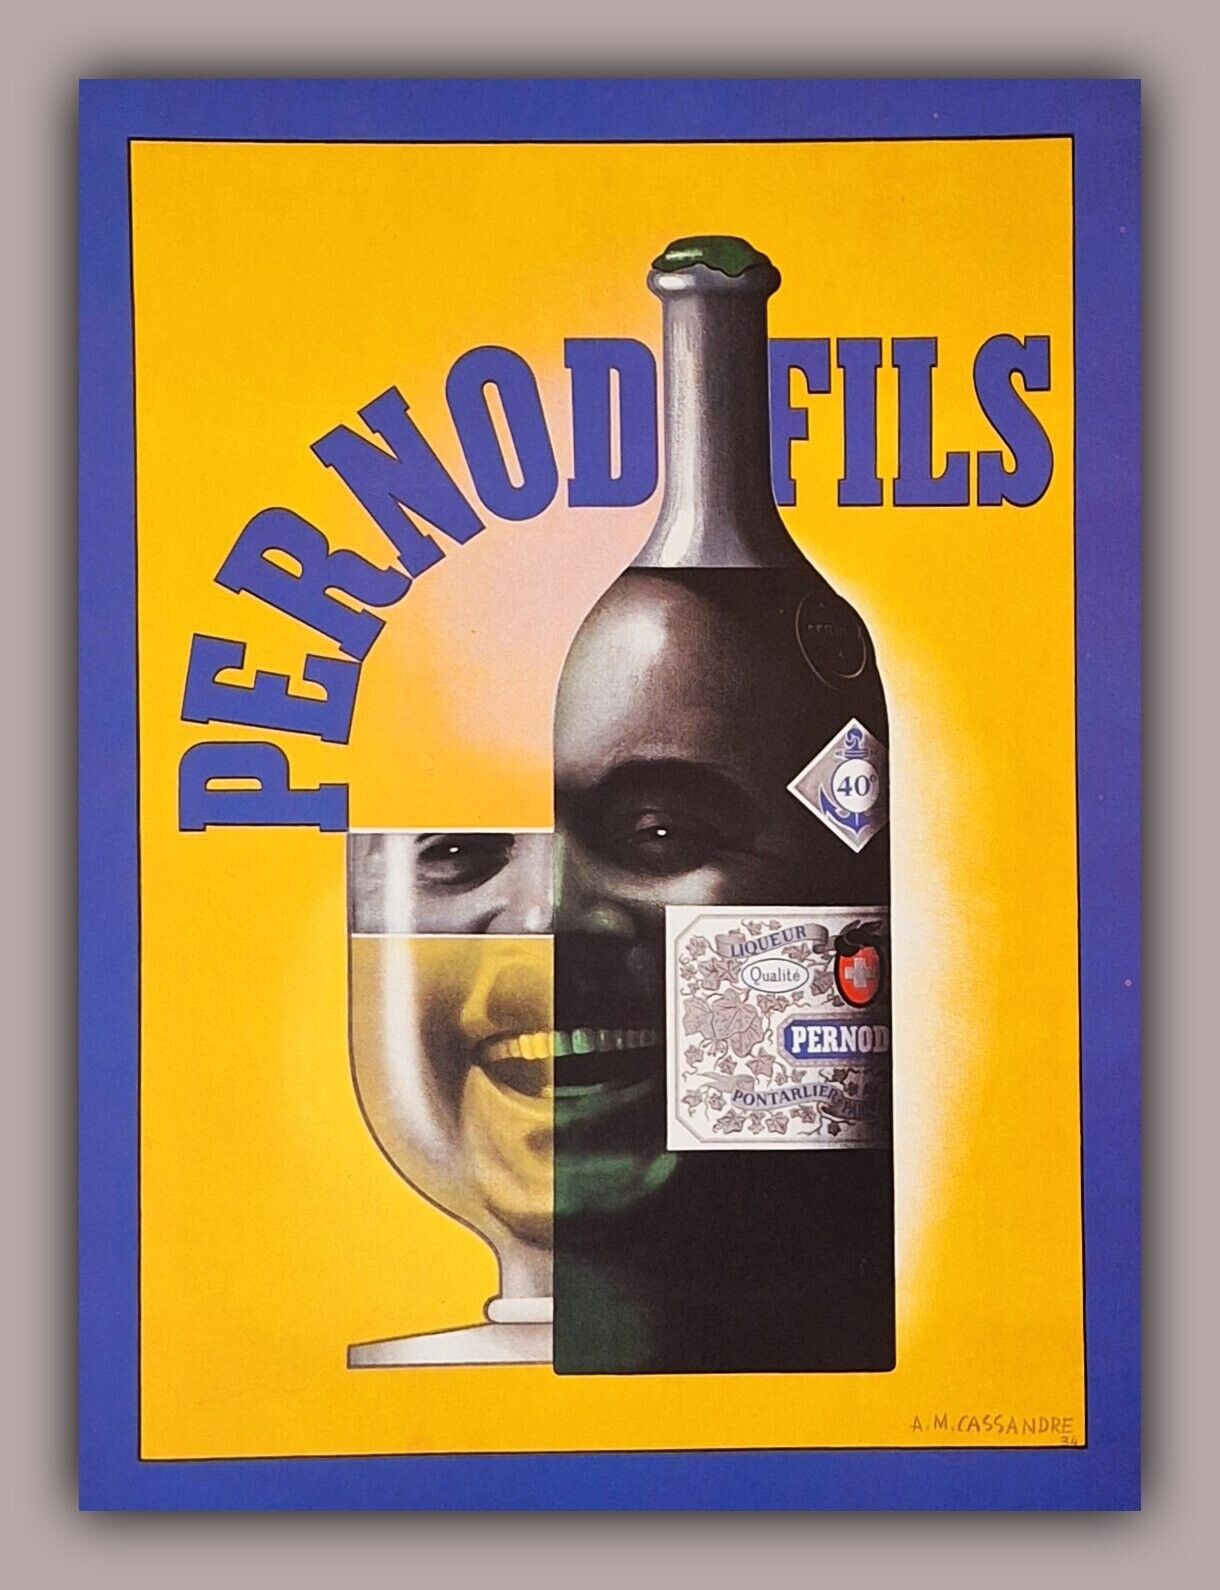 A. M. Cassandre Pernod Fils, Art Print from 1934 Poster, for framing Decor